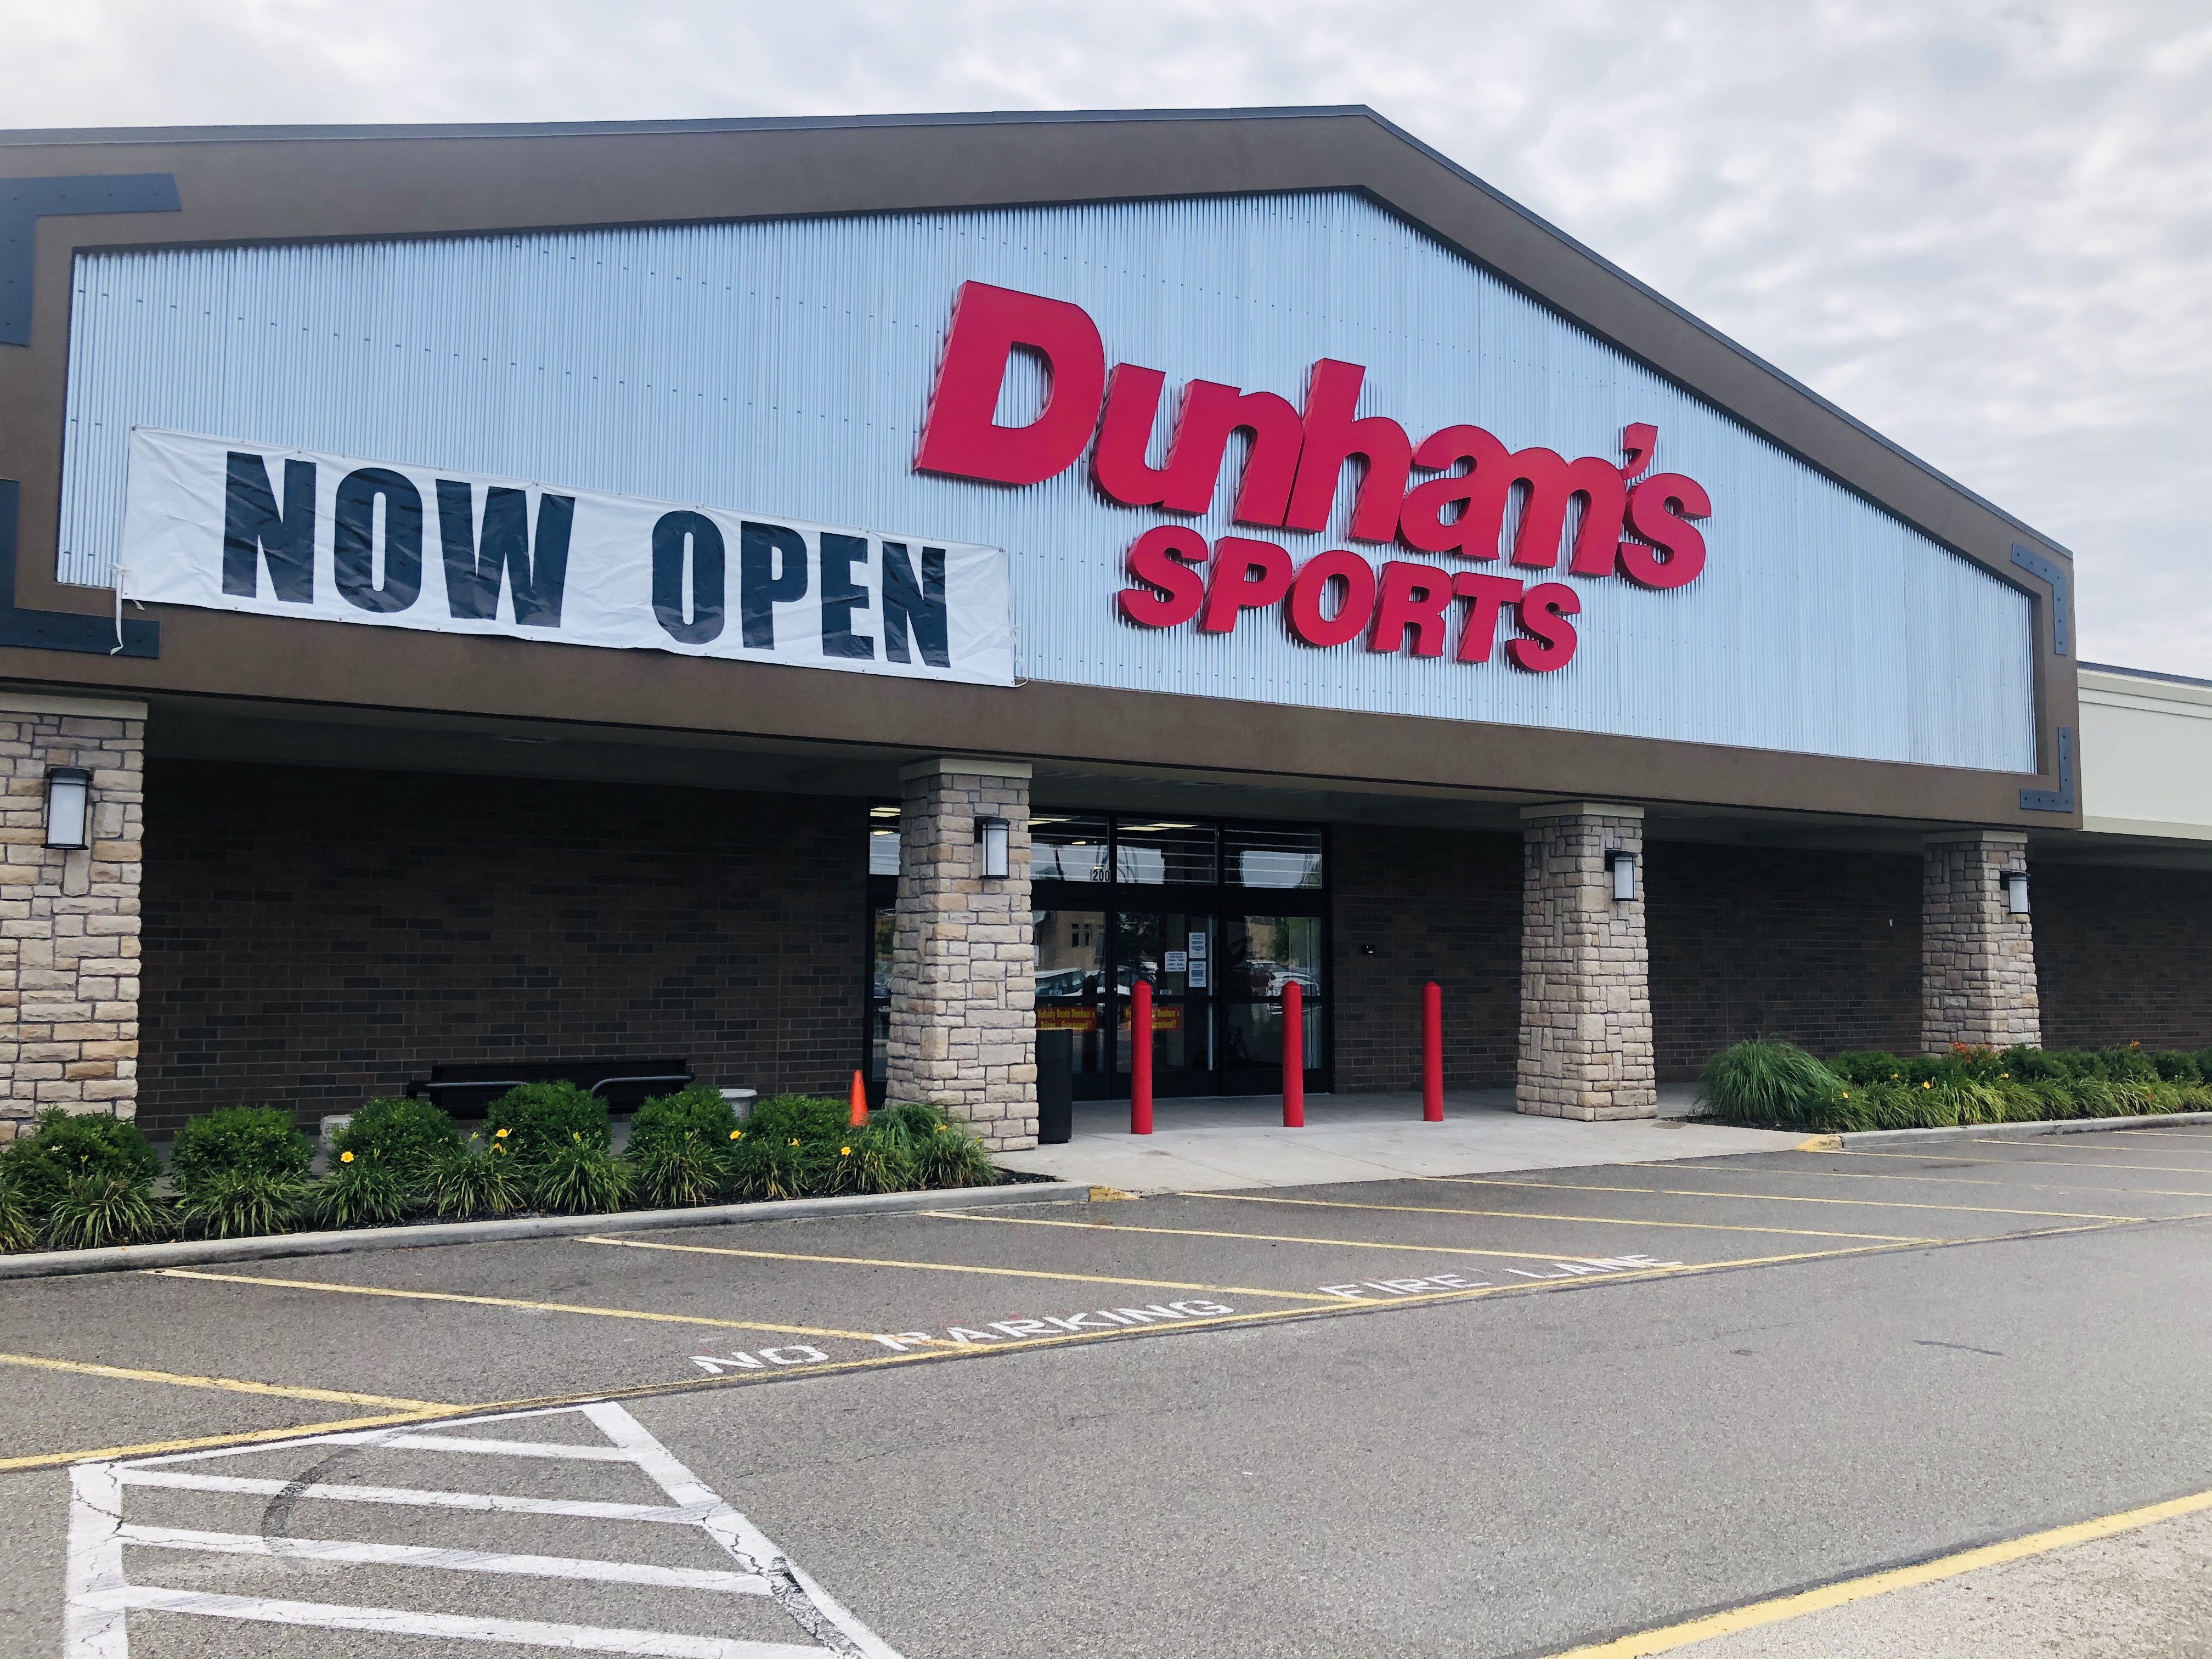 Dunhams Sports Opens New Location